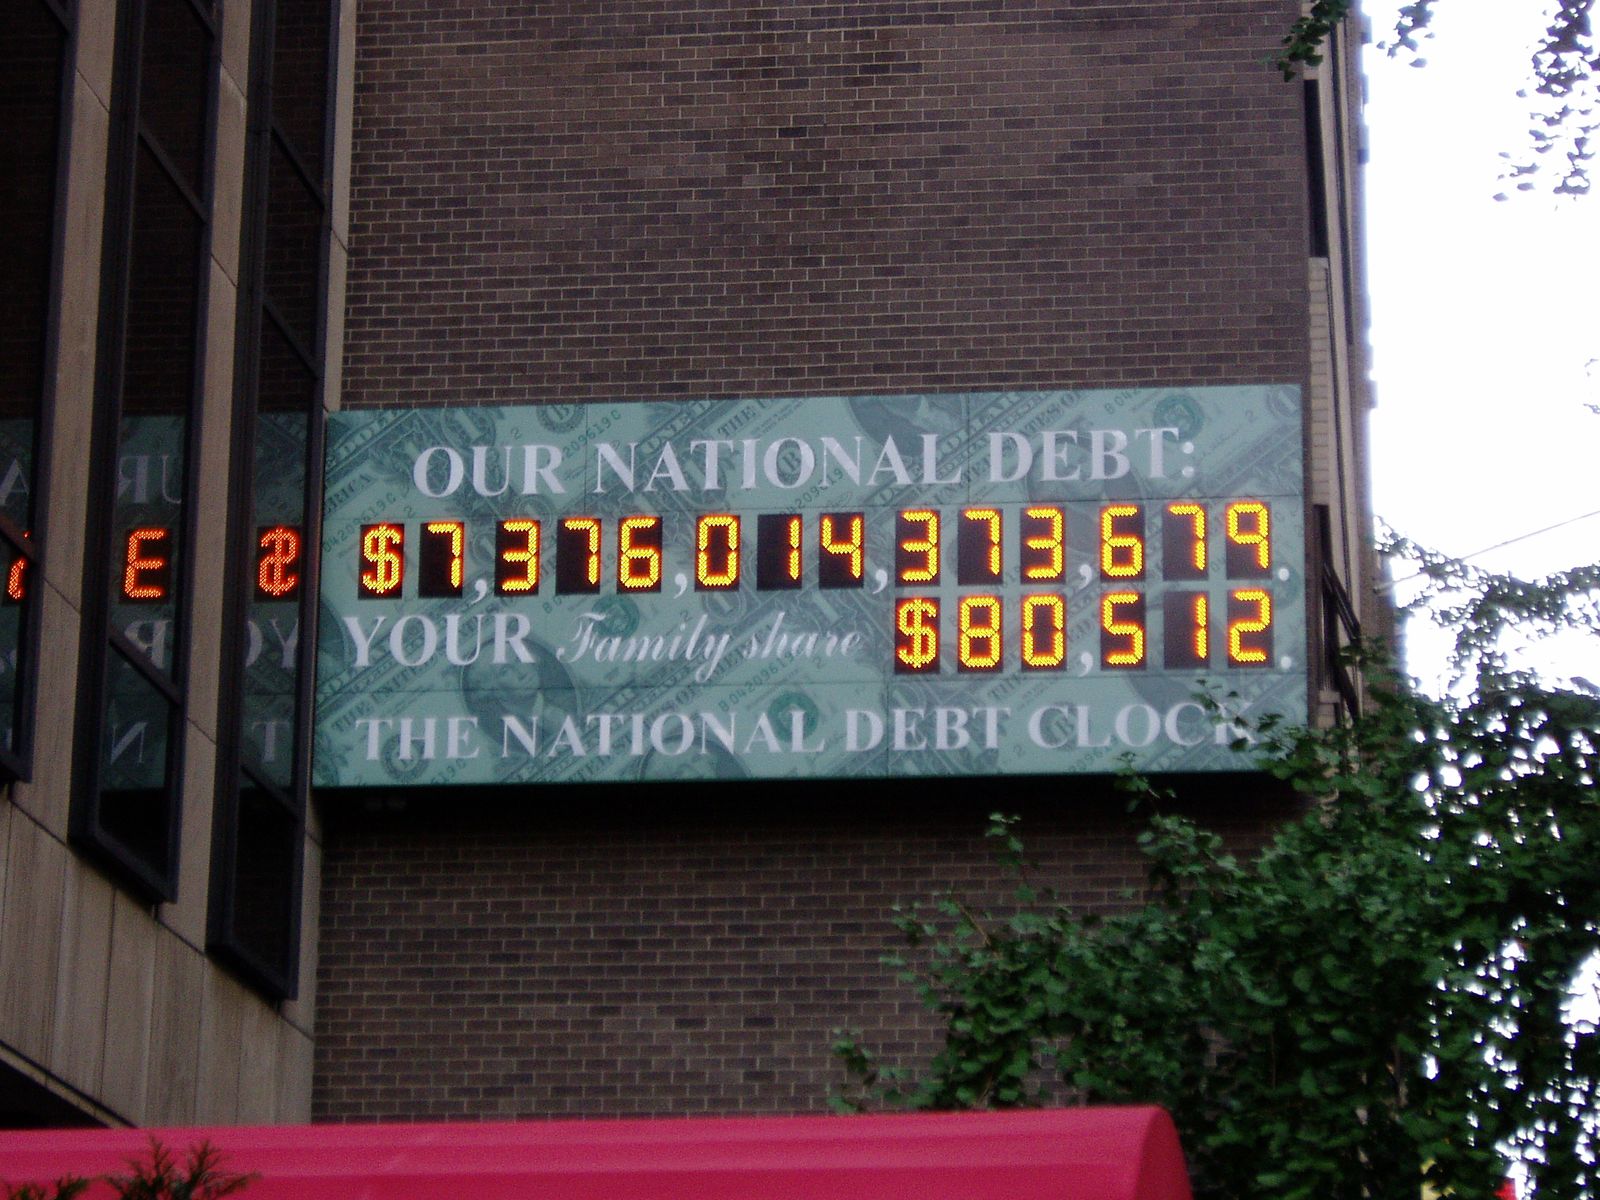 The National Debt Clock rollover